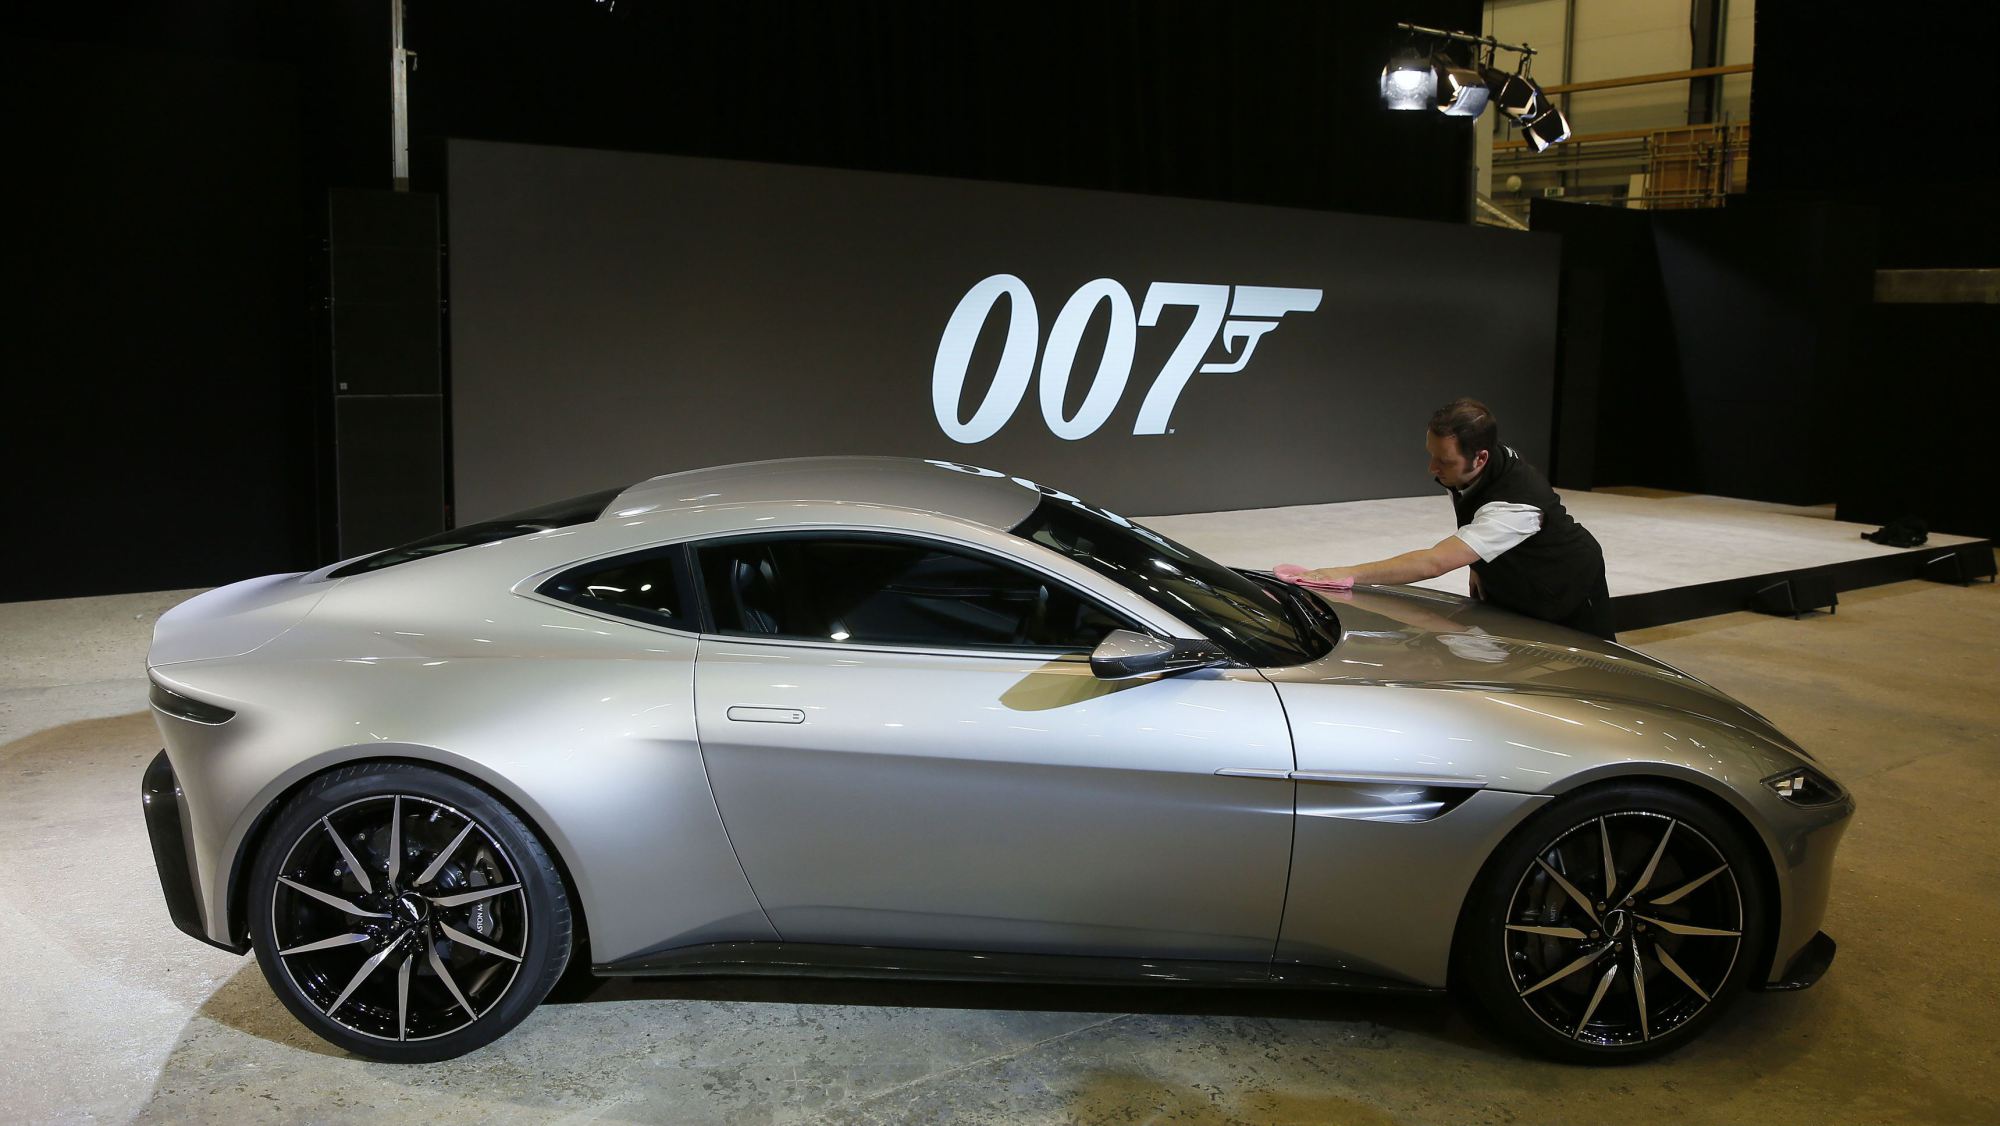 stolen Bond cars